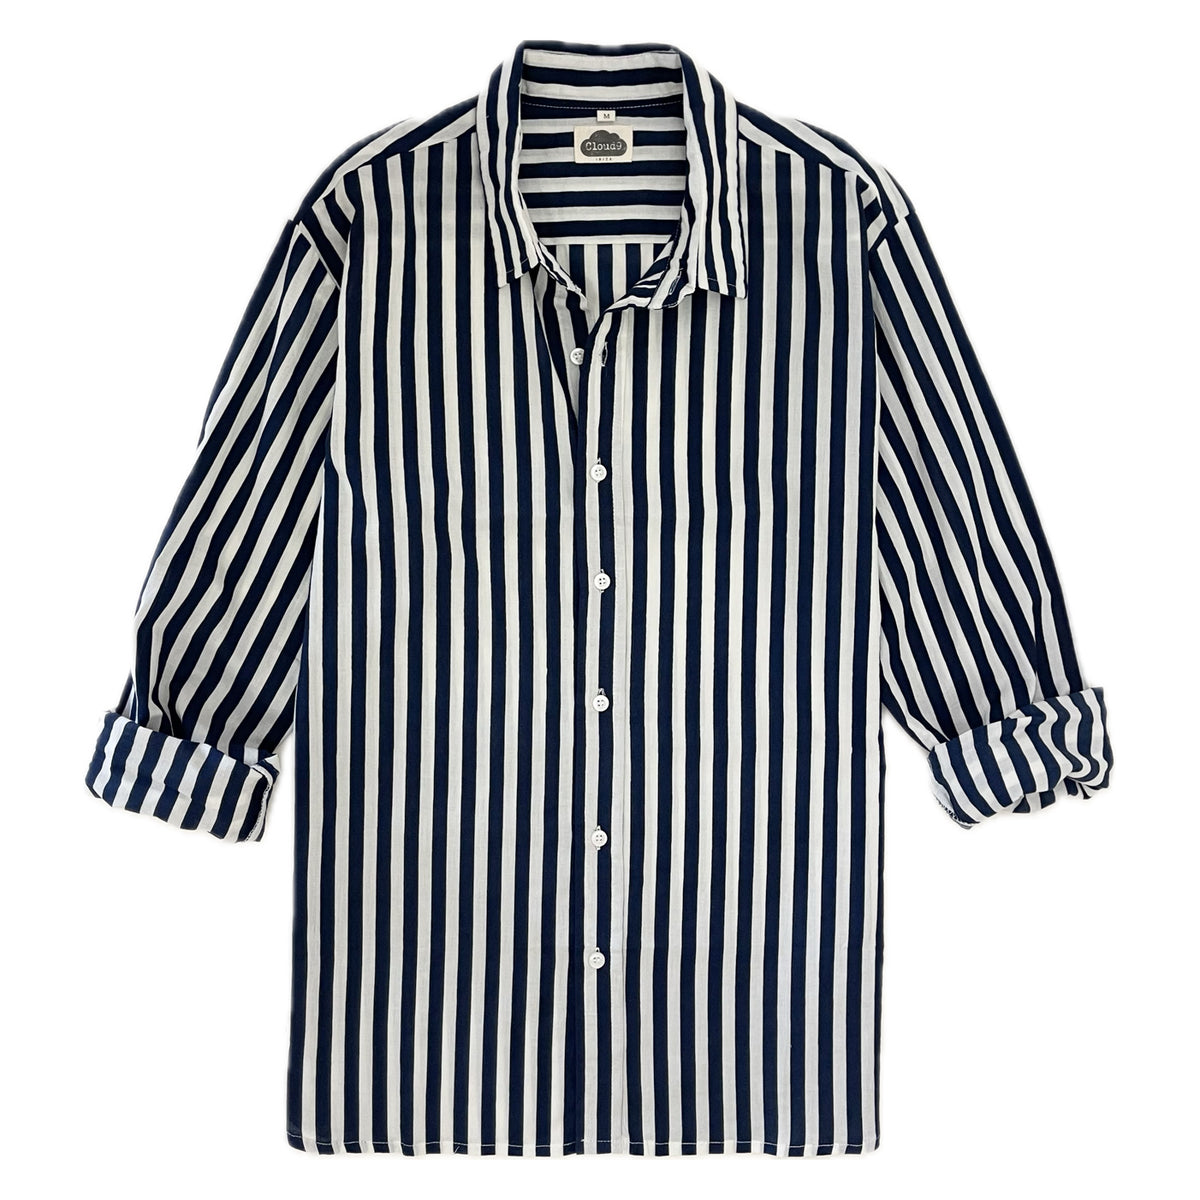 Navy Blue Stripped Cotton Shirt